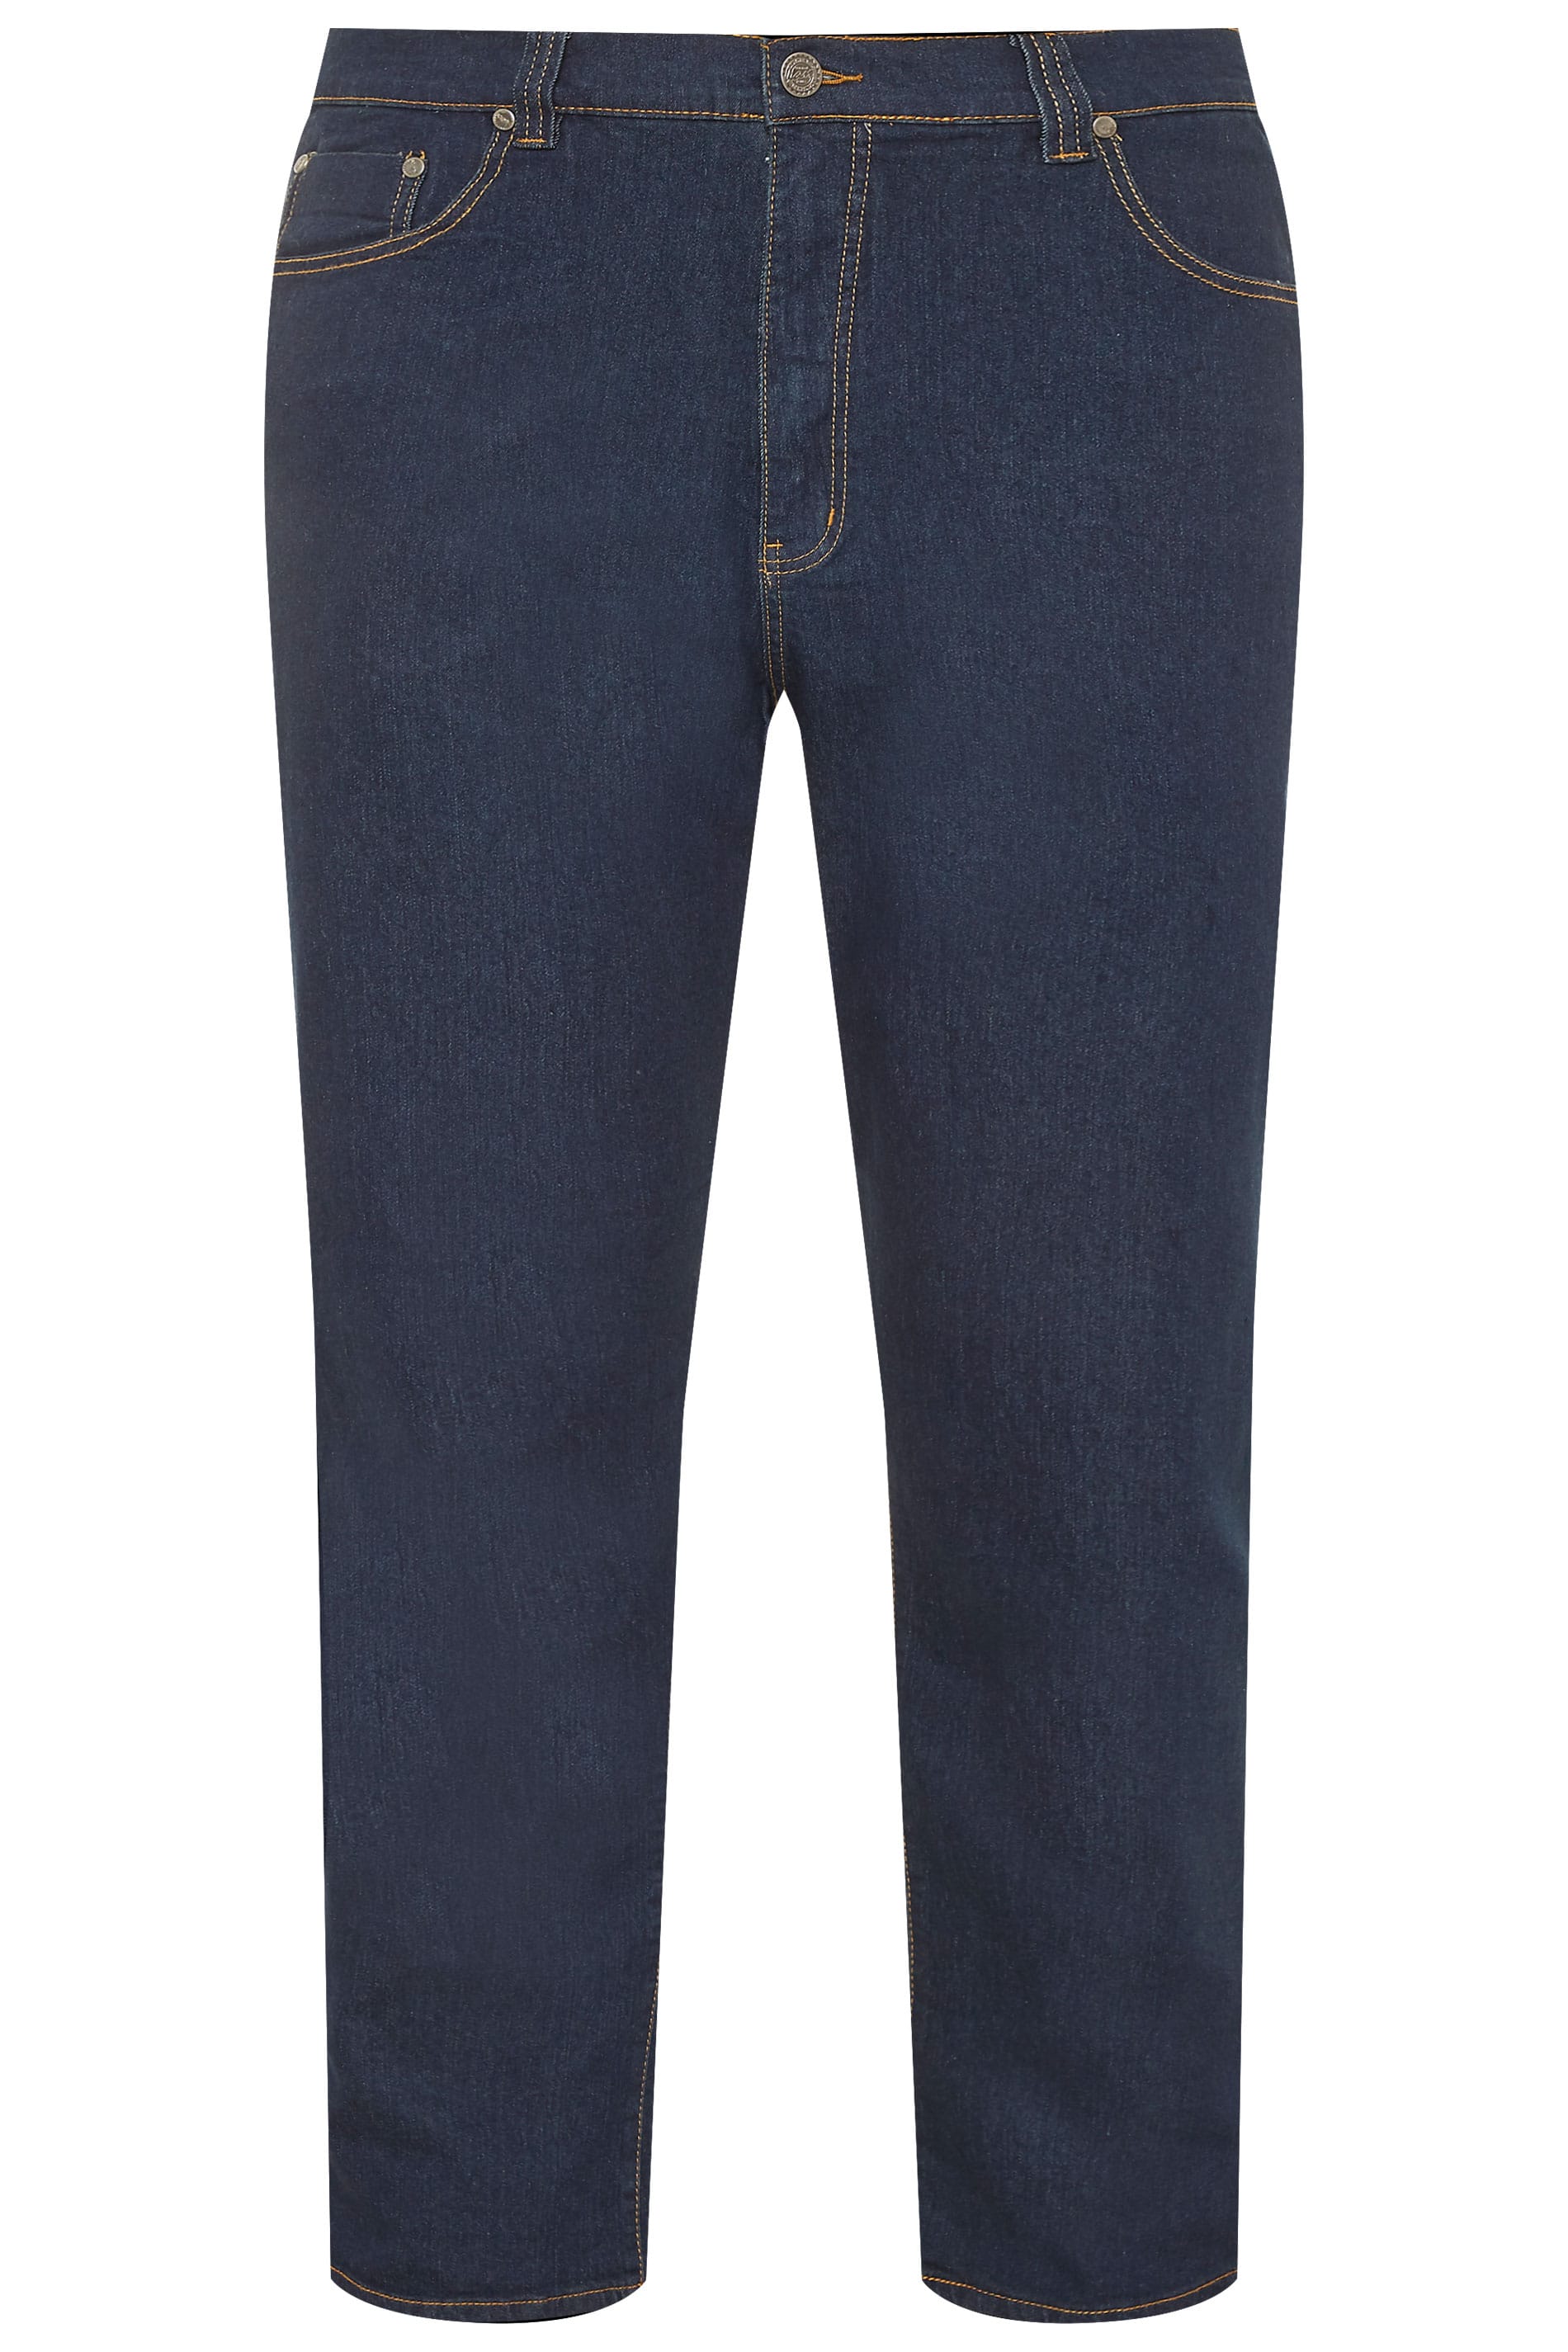 KAM Indigo Blue Regular Fit Stretch Jeans | BadRhino 3